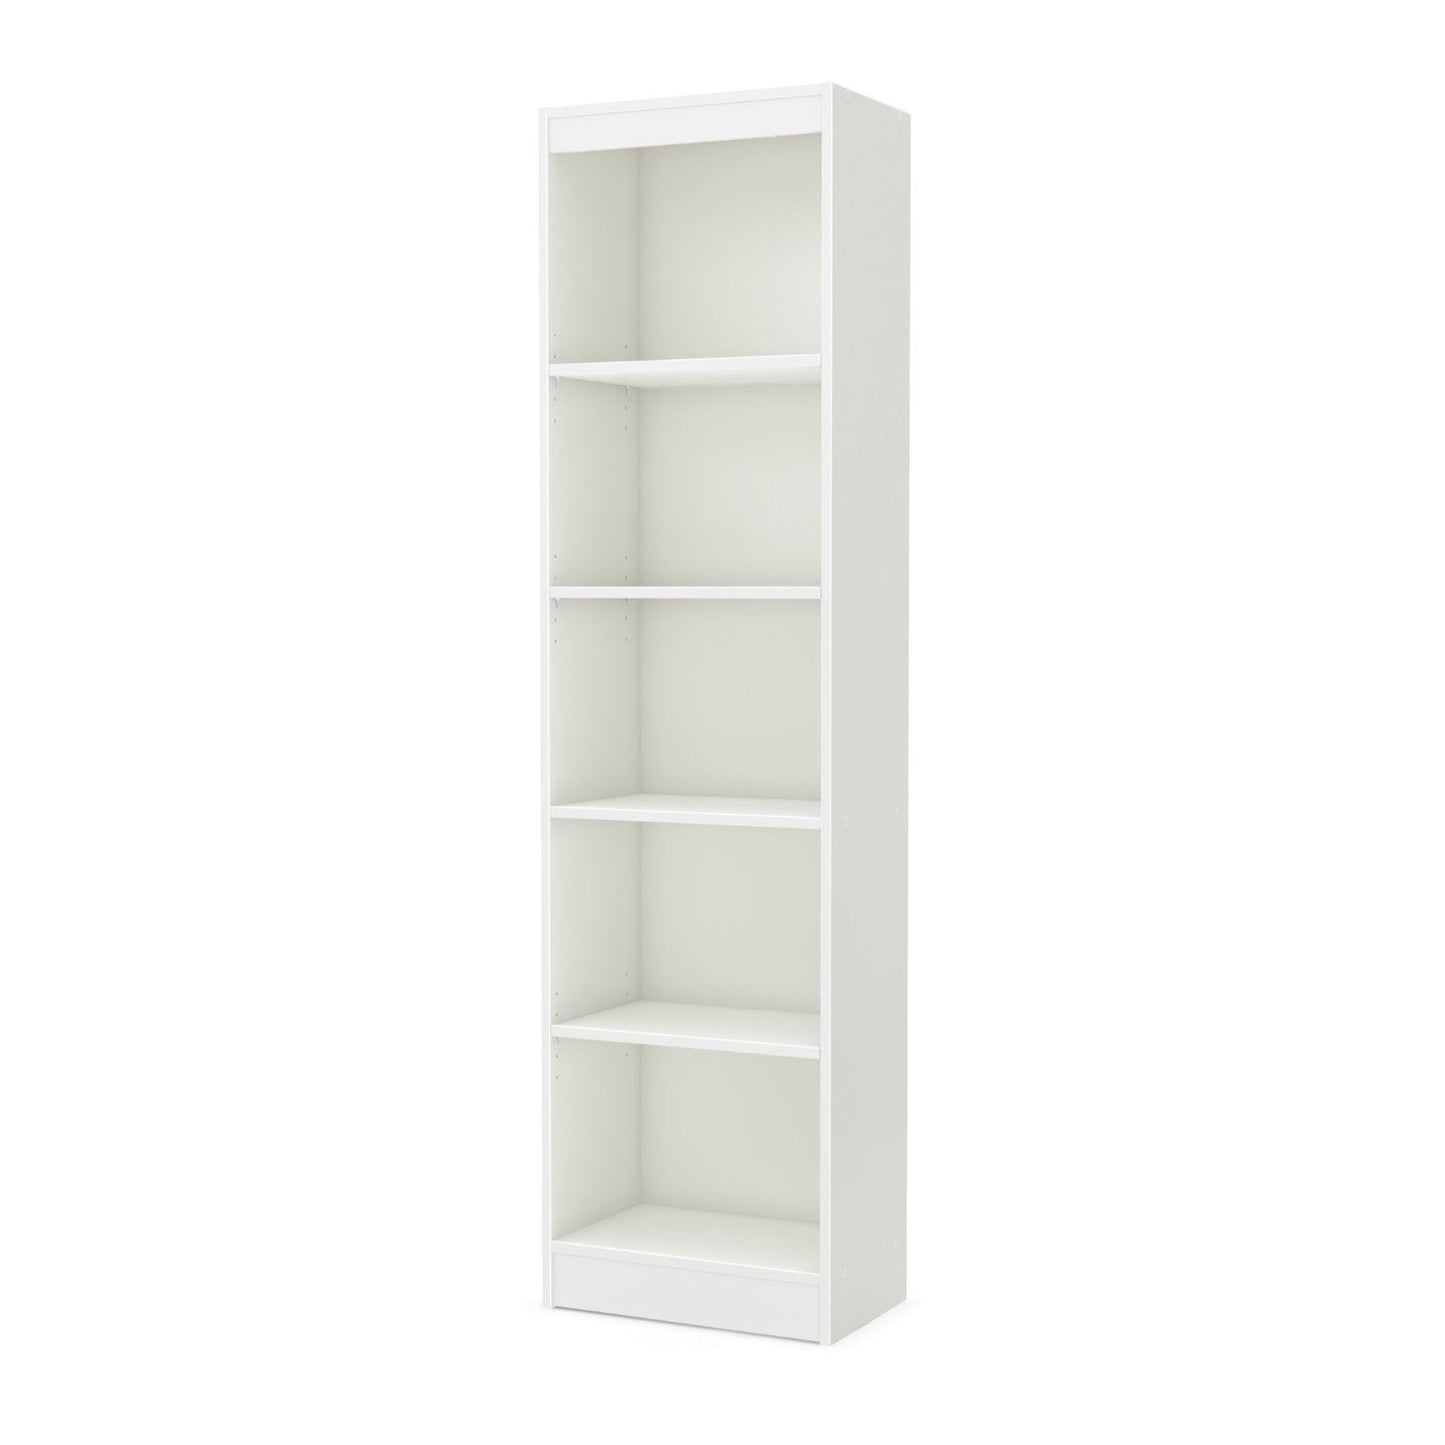 Living Room > Bookcases - 5-Shelf Narrow Bookcase Storage Shelves In White Wood Finish